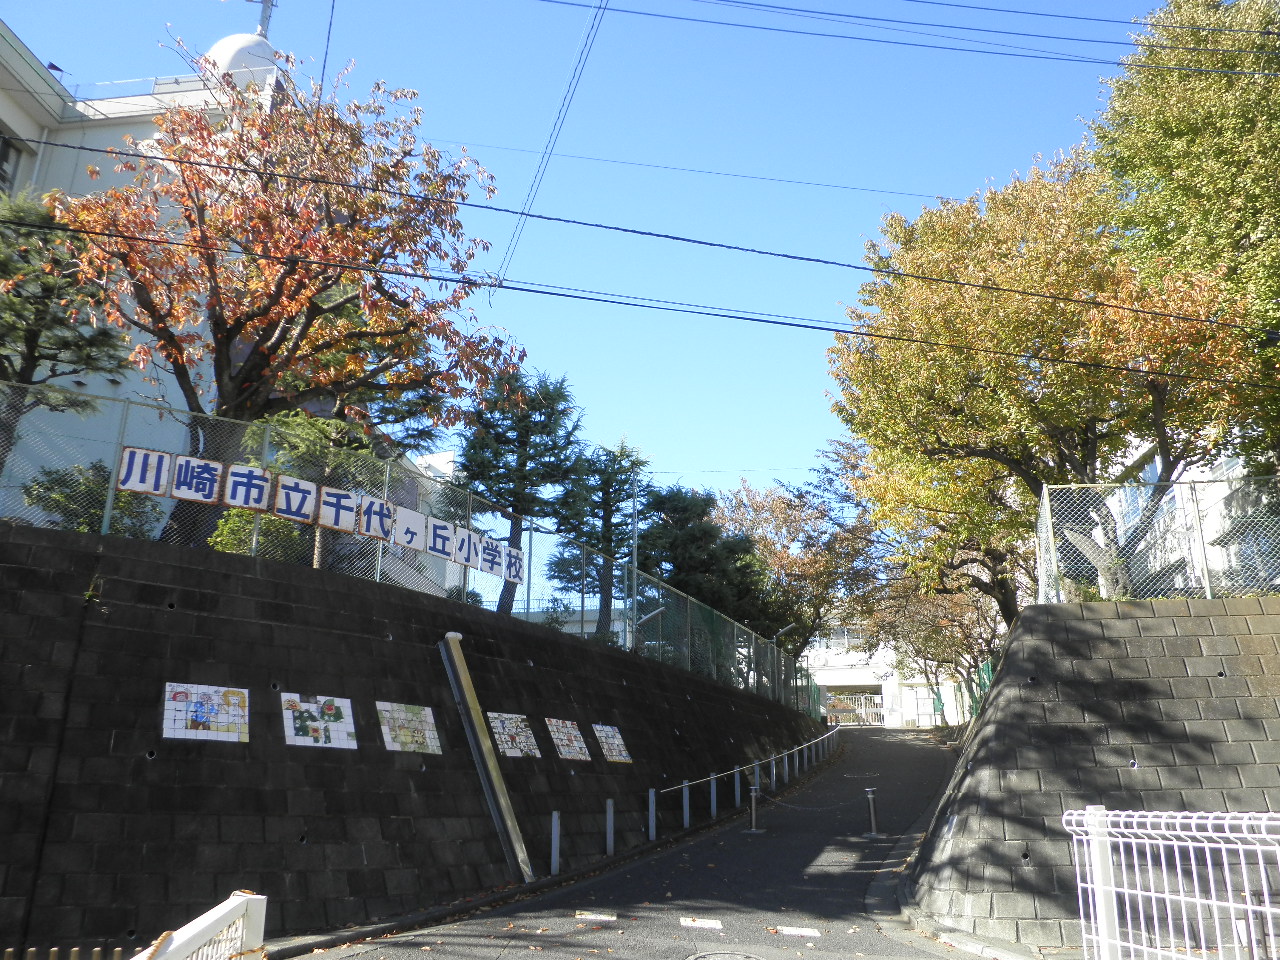 Primary school. 680m to the Kawasaki Municipal Chiyogaoka elementary school (elementary school)